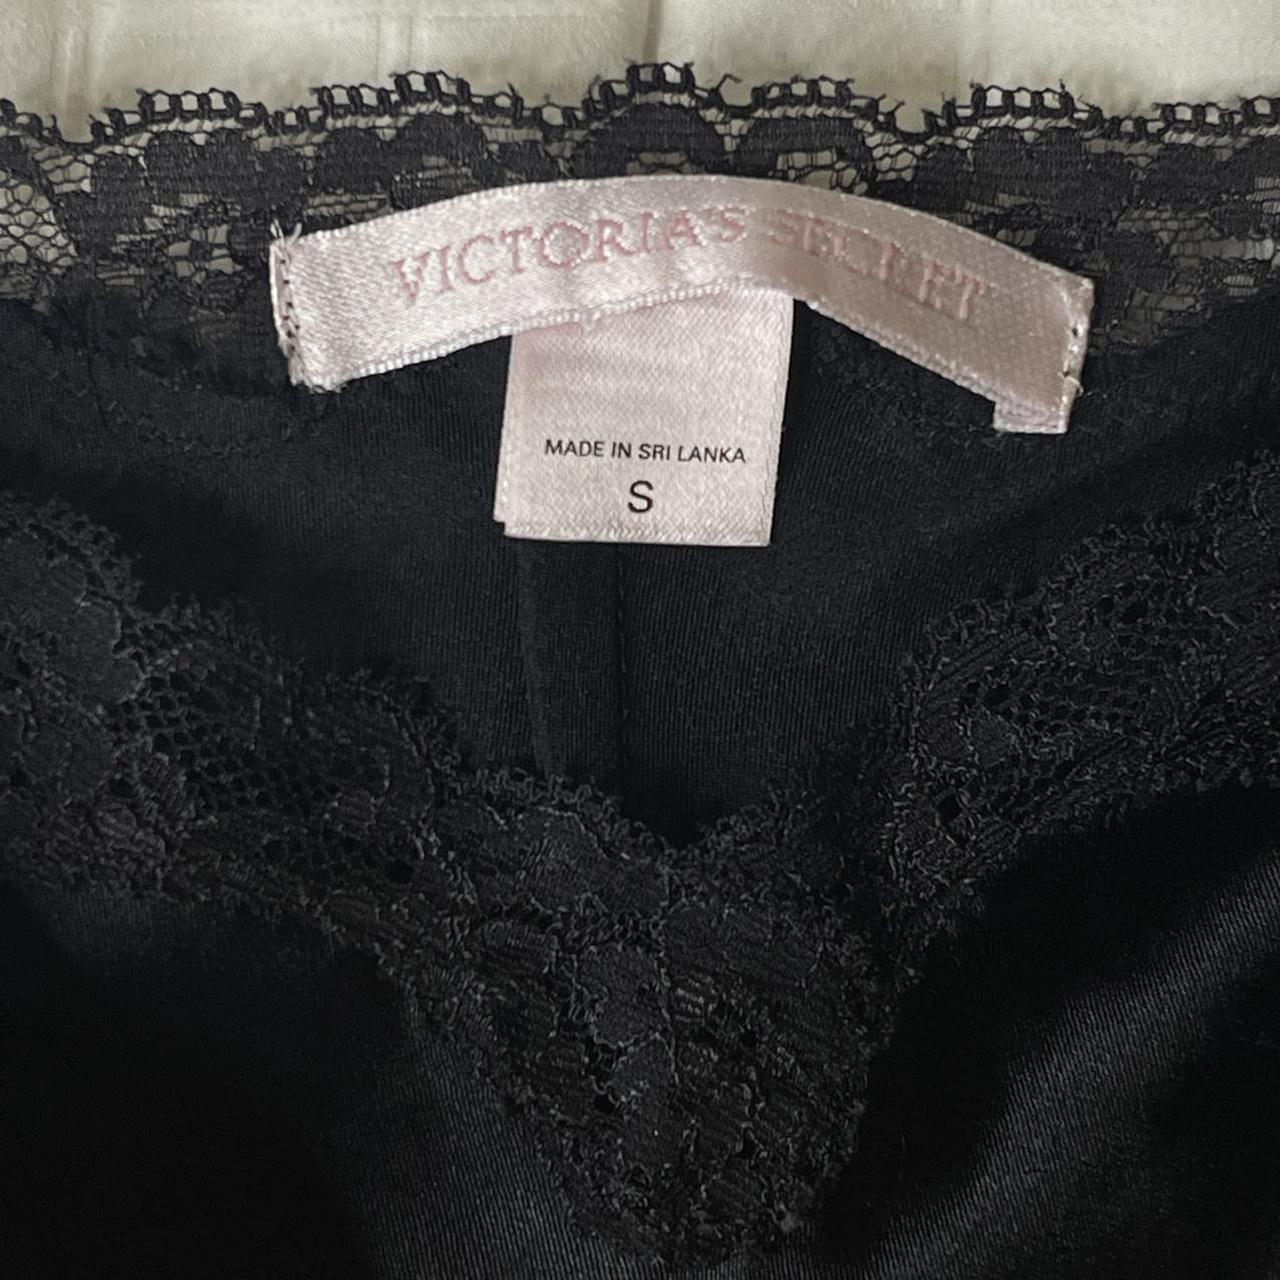 Stunning Victoria’s Secret Slip Dress 🖤 The cutest... - Depop